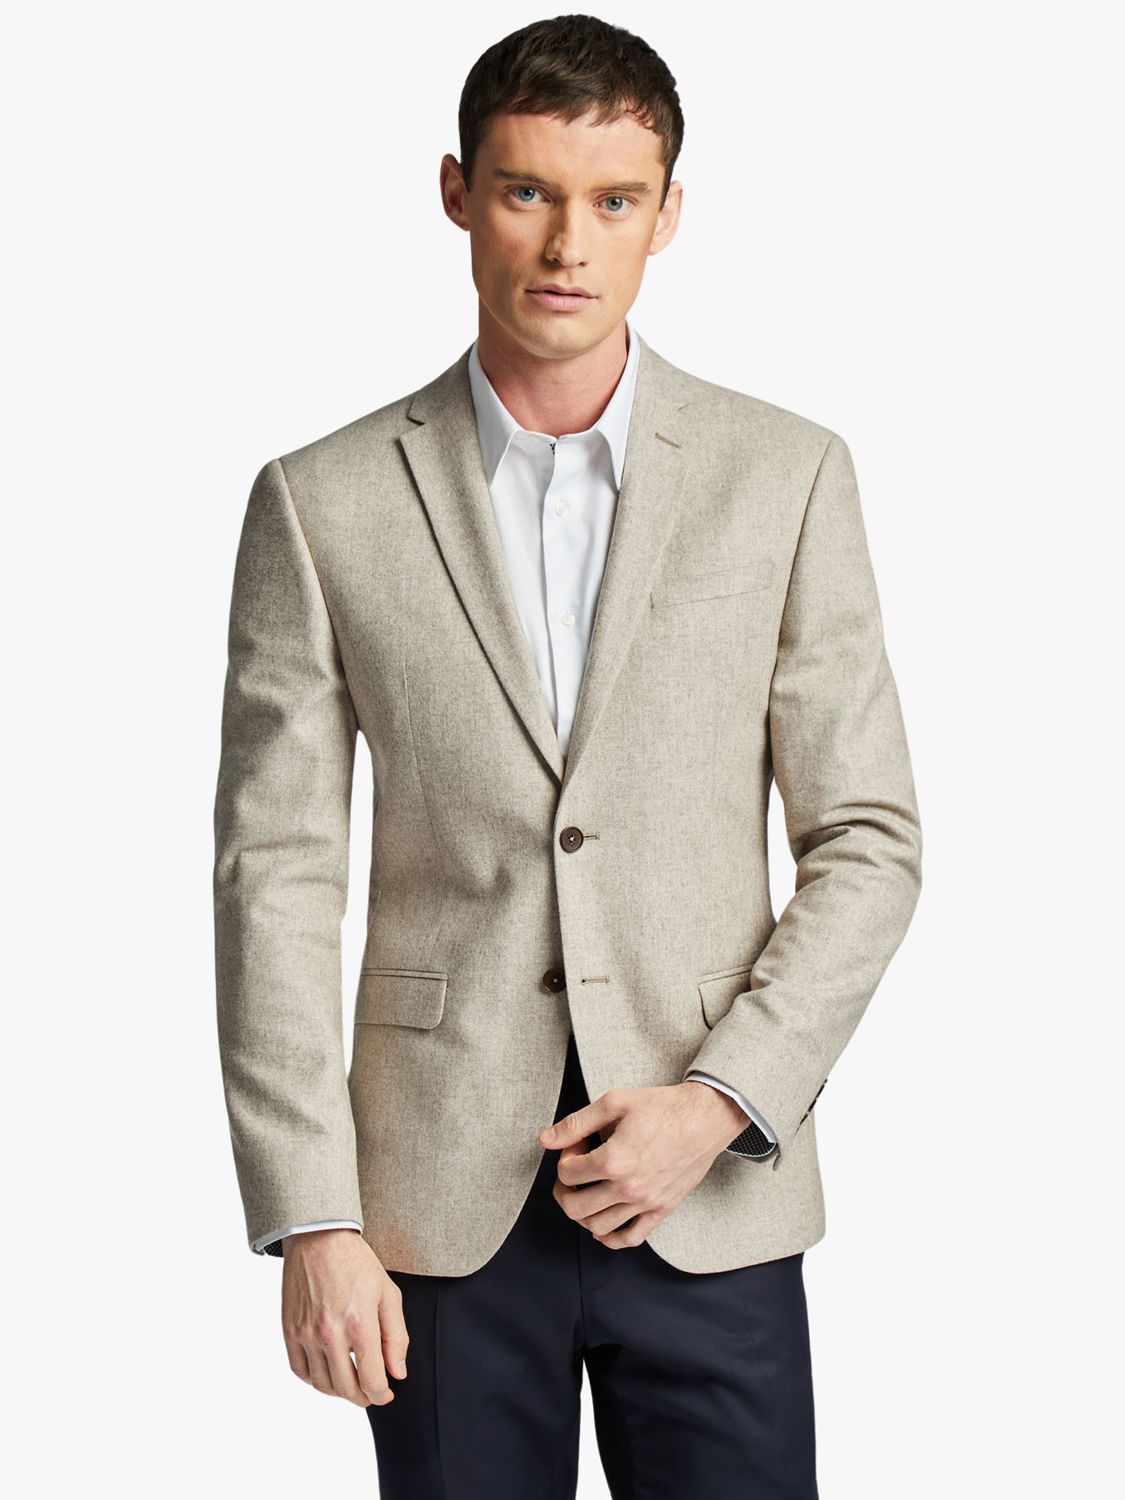 Ted Baker Apus Slim Fit Wool Blend Suit Jacket, Oatmeal, 38R